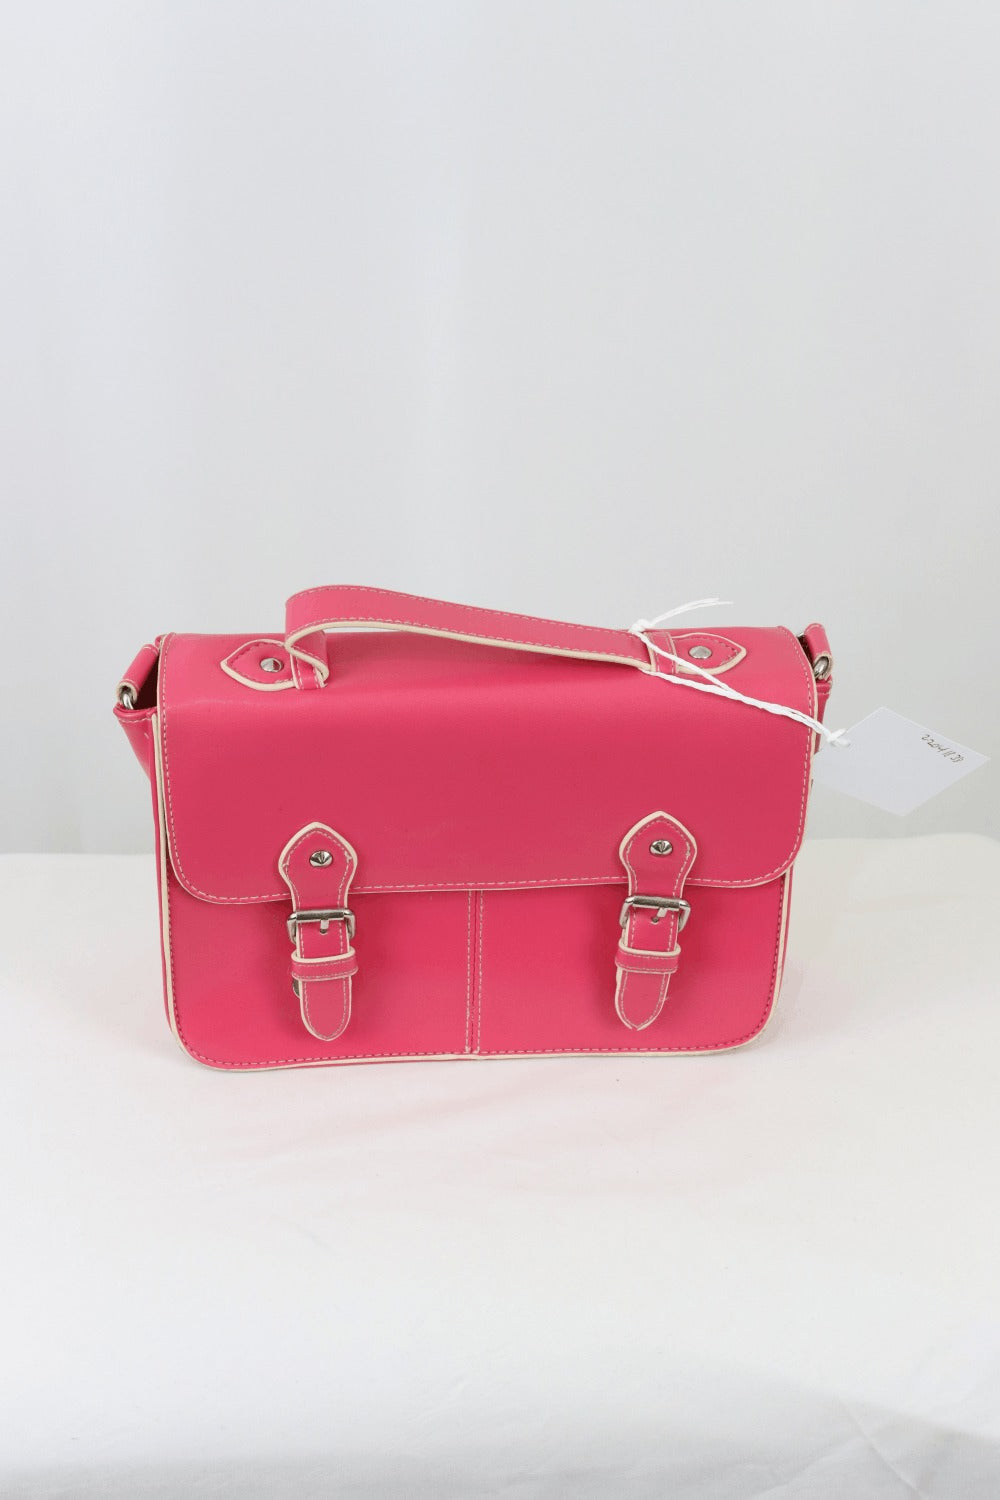 Topshop Pink Suitcase Bag